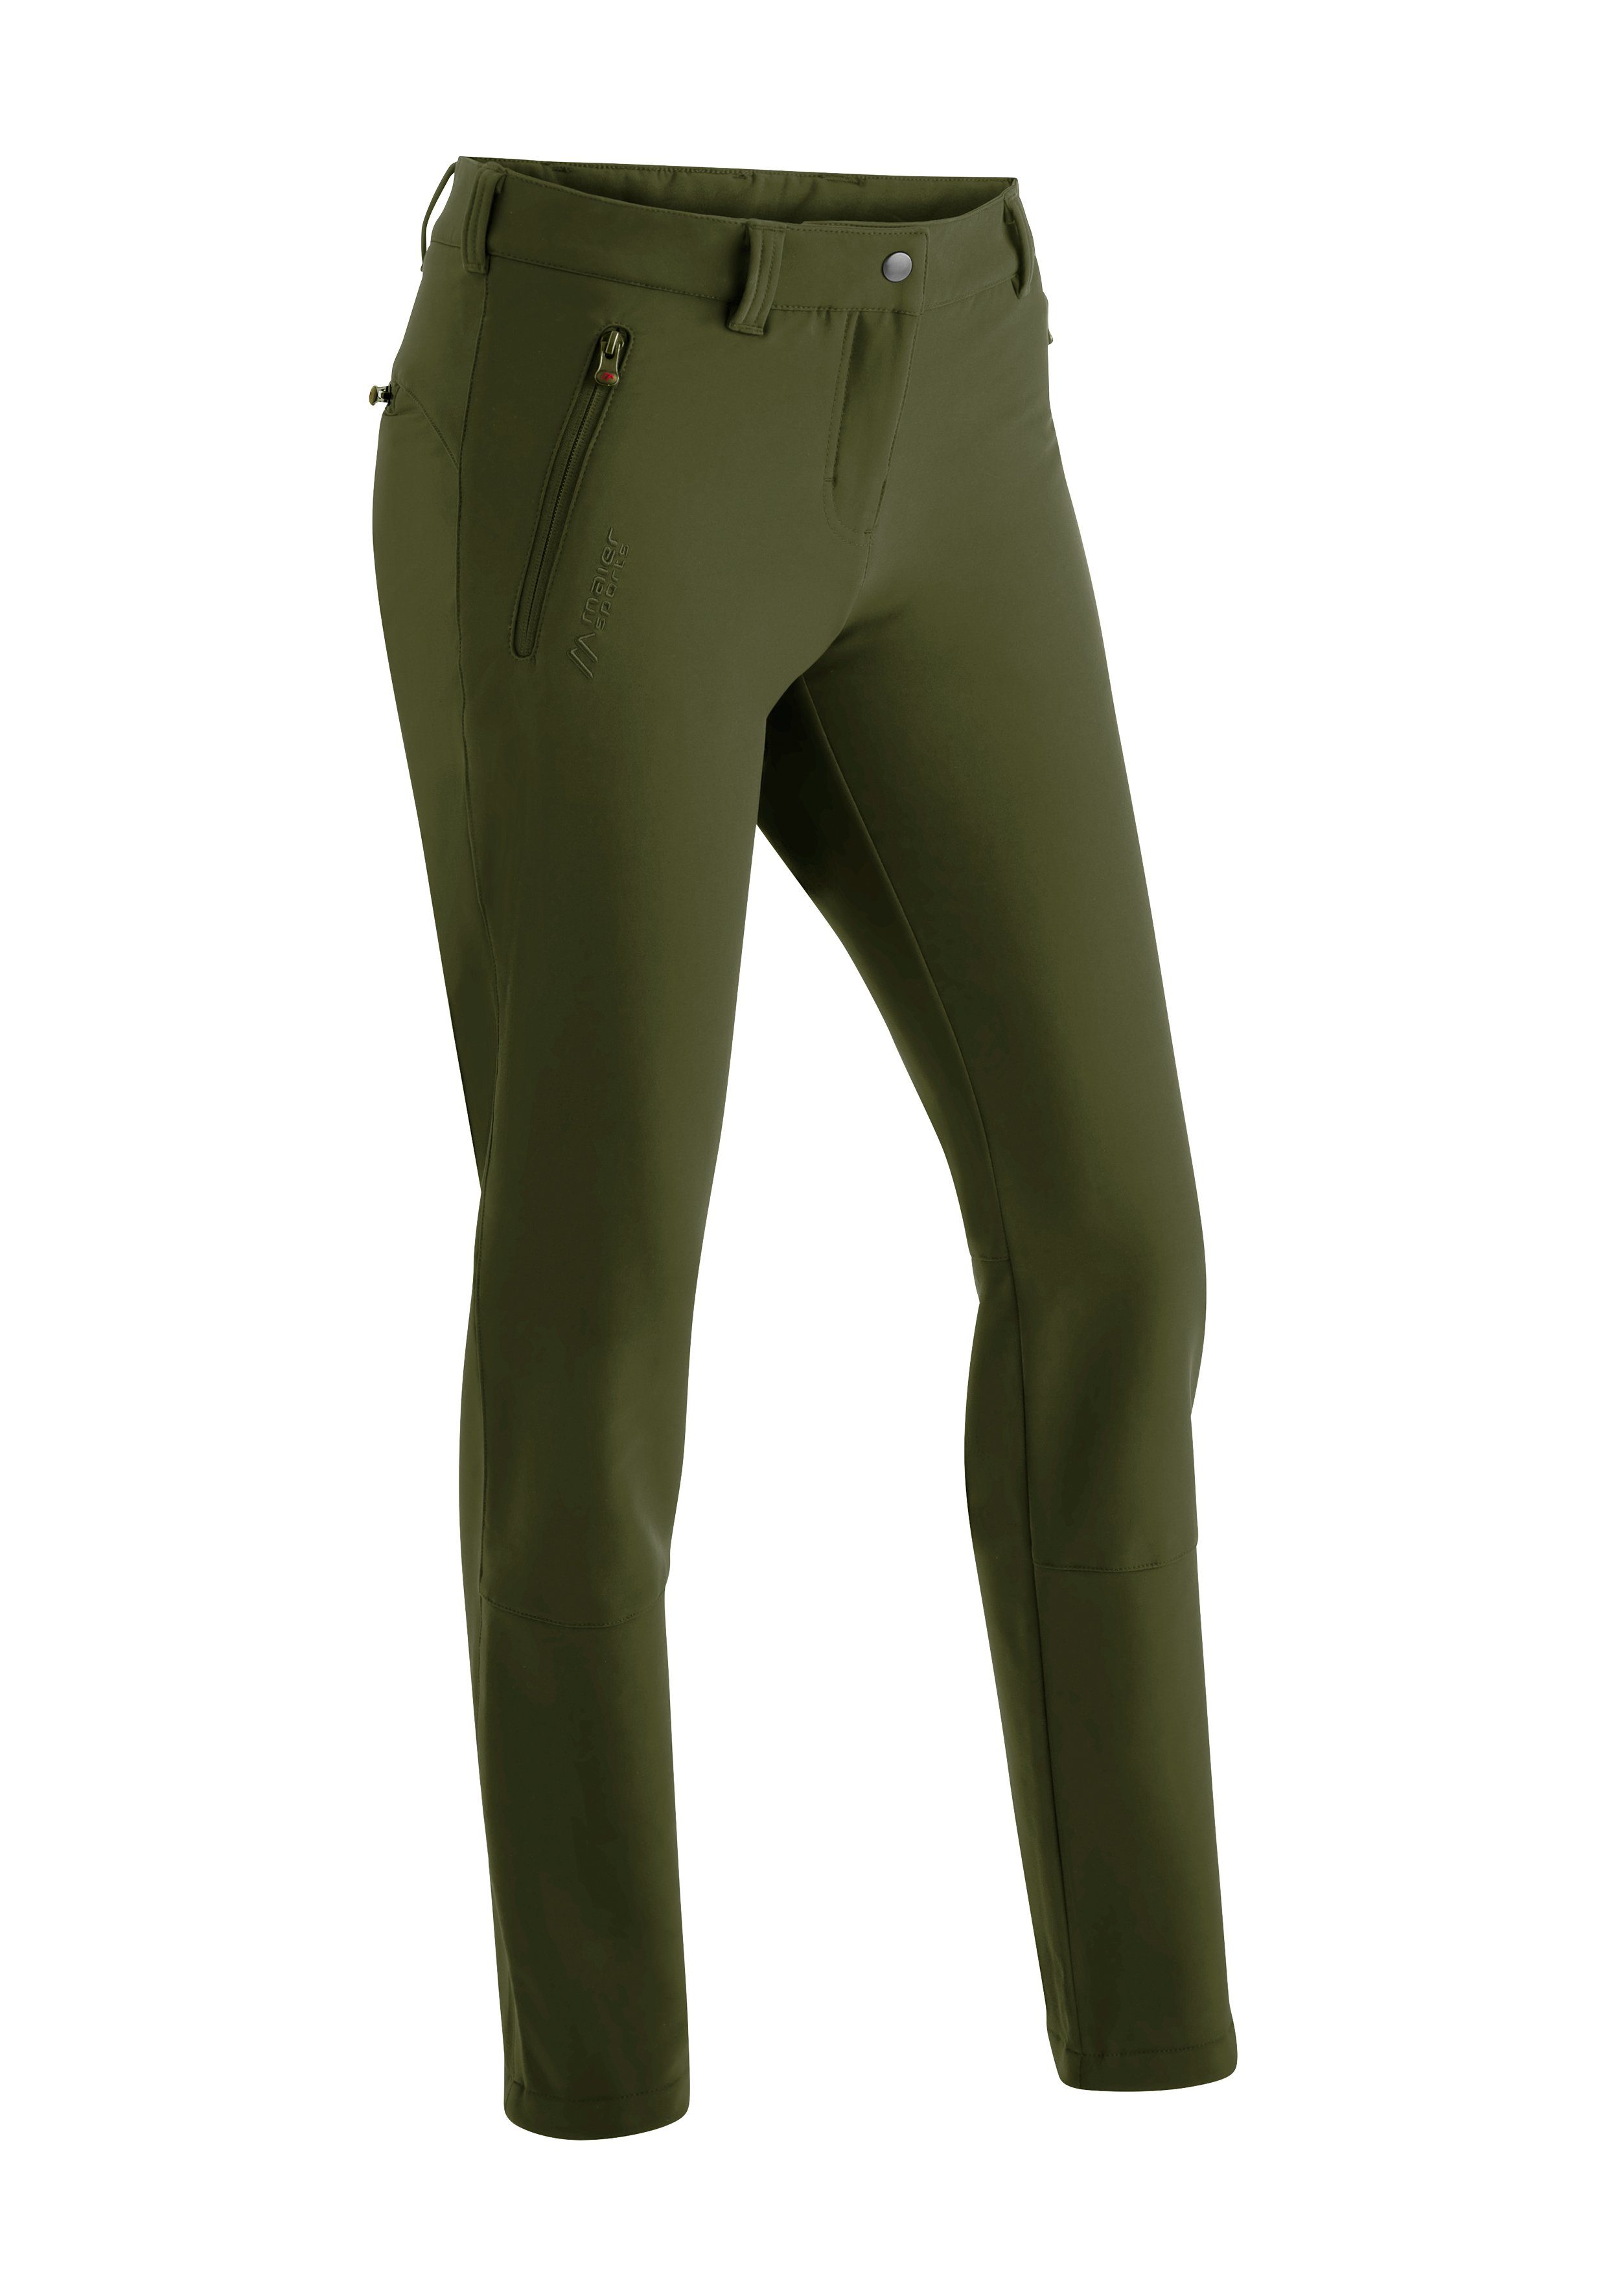 Maier Sports Funktionshose Helga slim Slim fit, Winter-Outdoorhose, sehr elastisch dunkelgrün